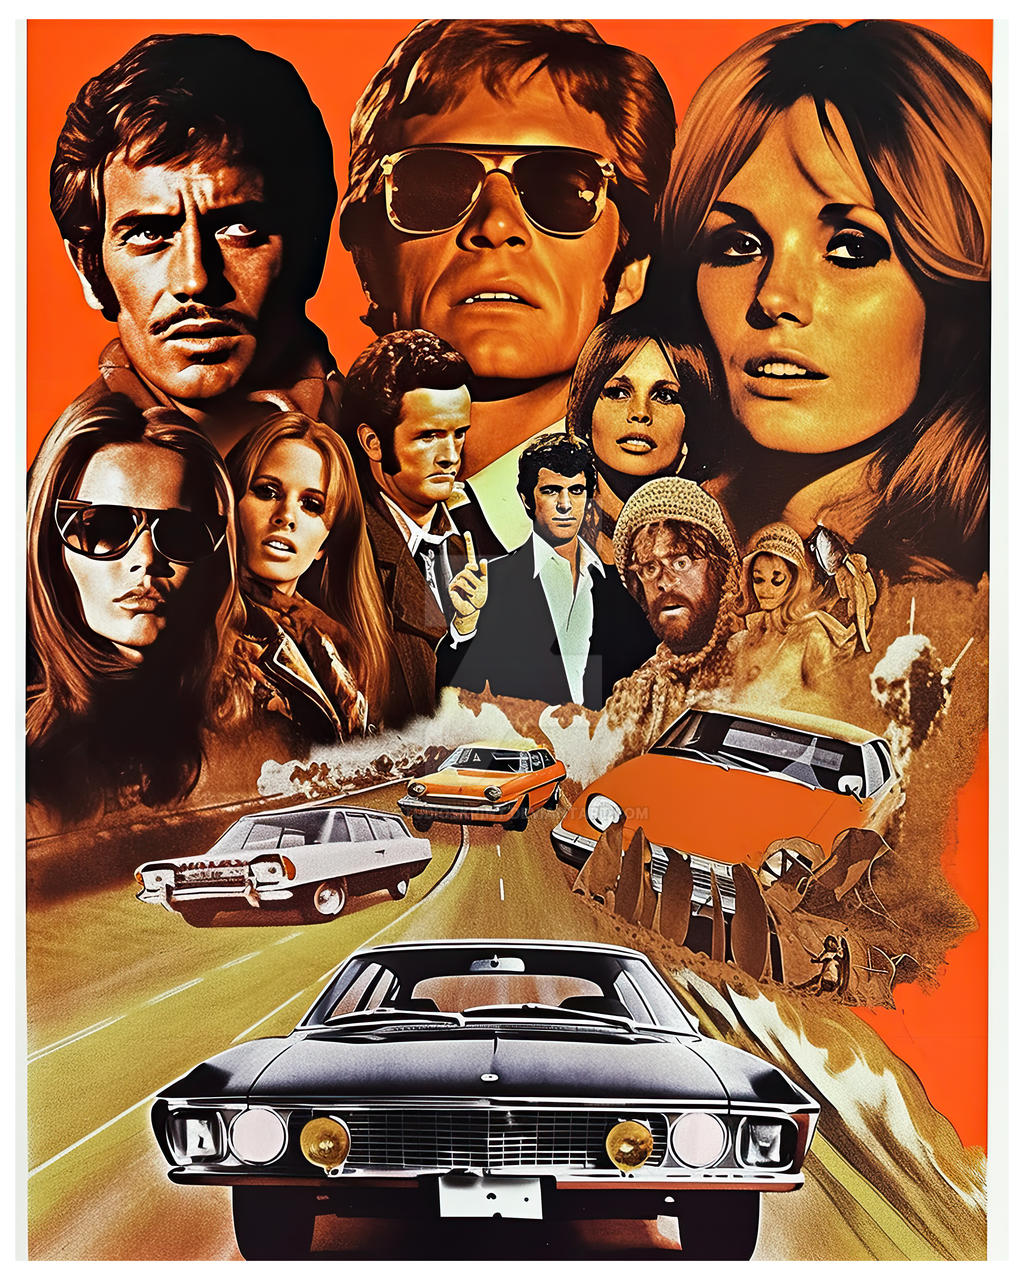 Action Movie Poster Retro Vintage 1970s Style by studioskrint on DeviantArt